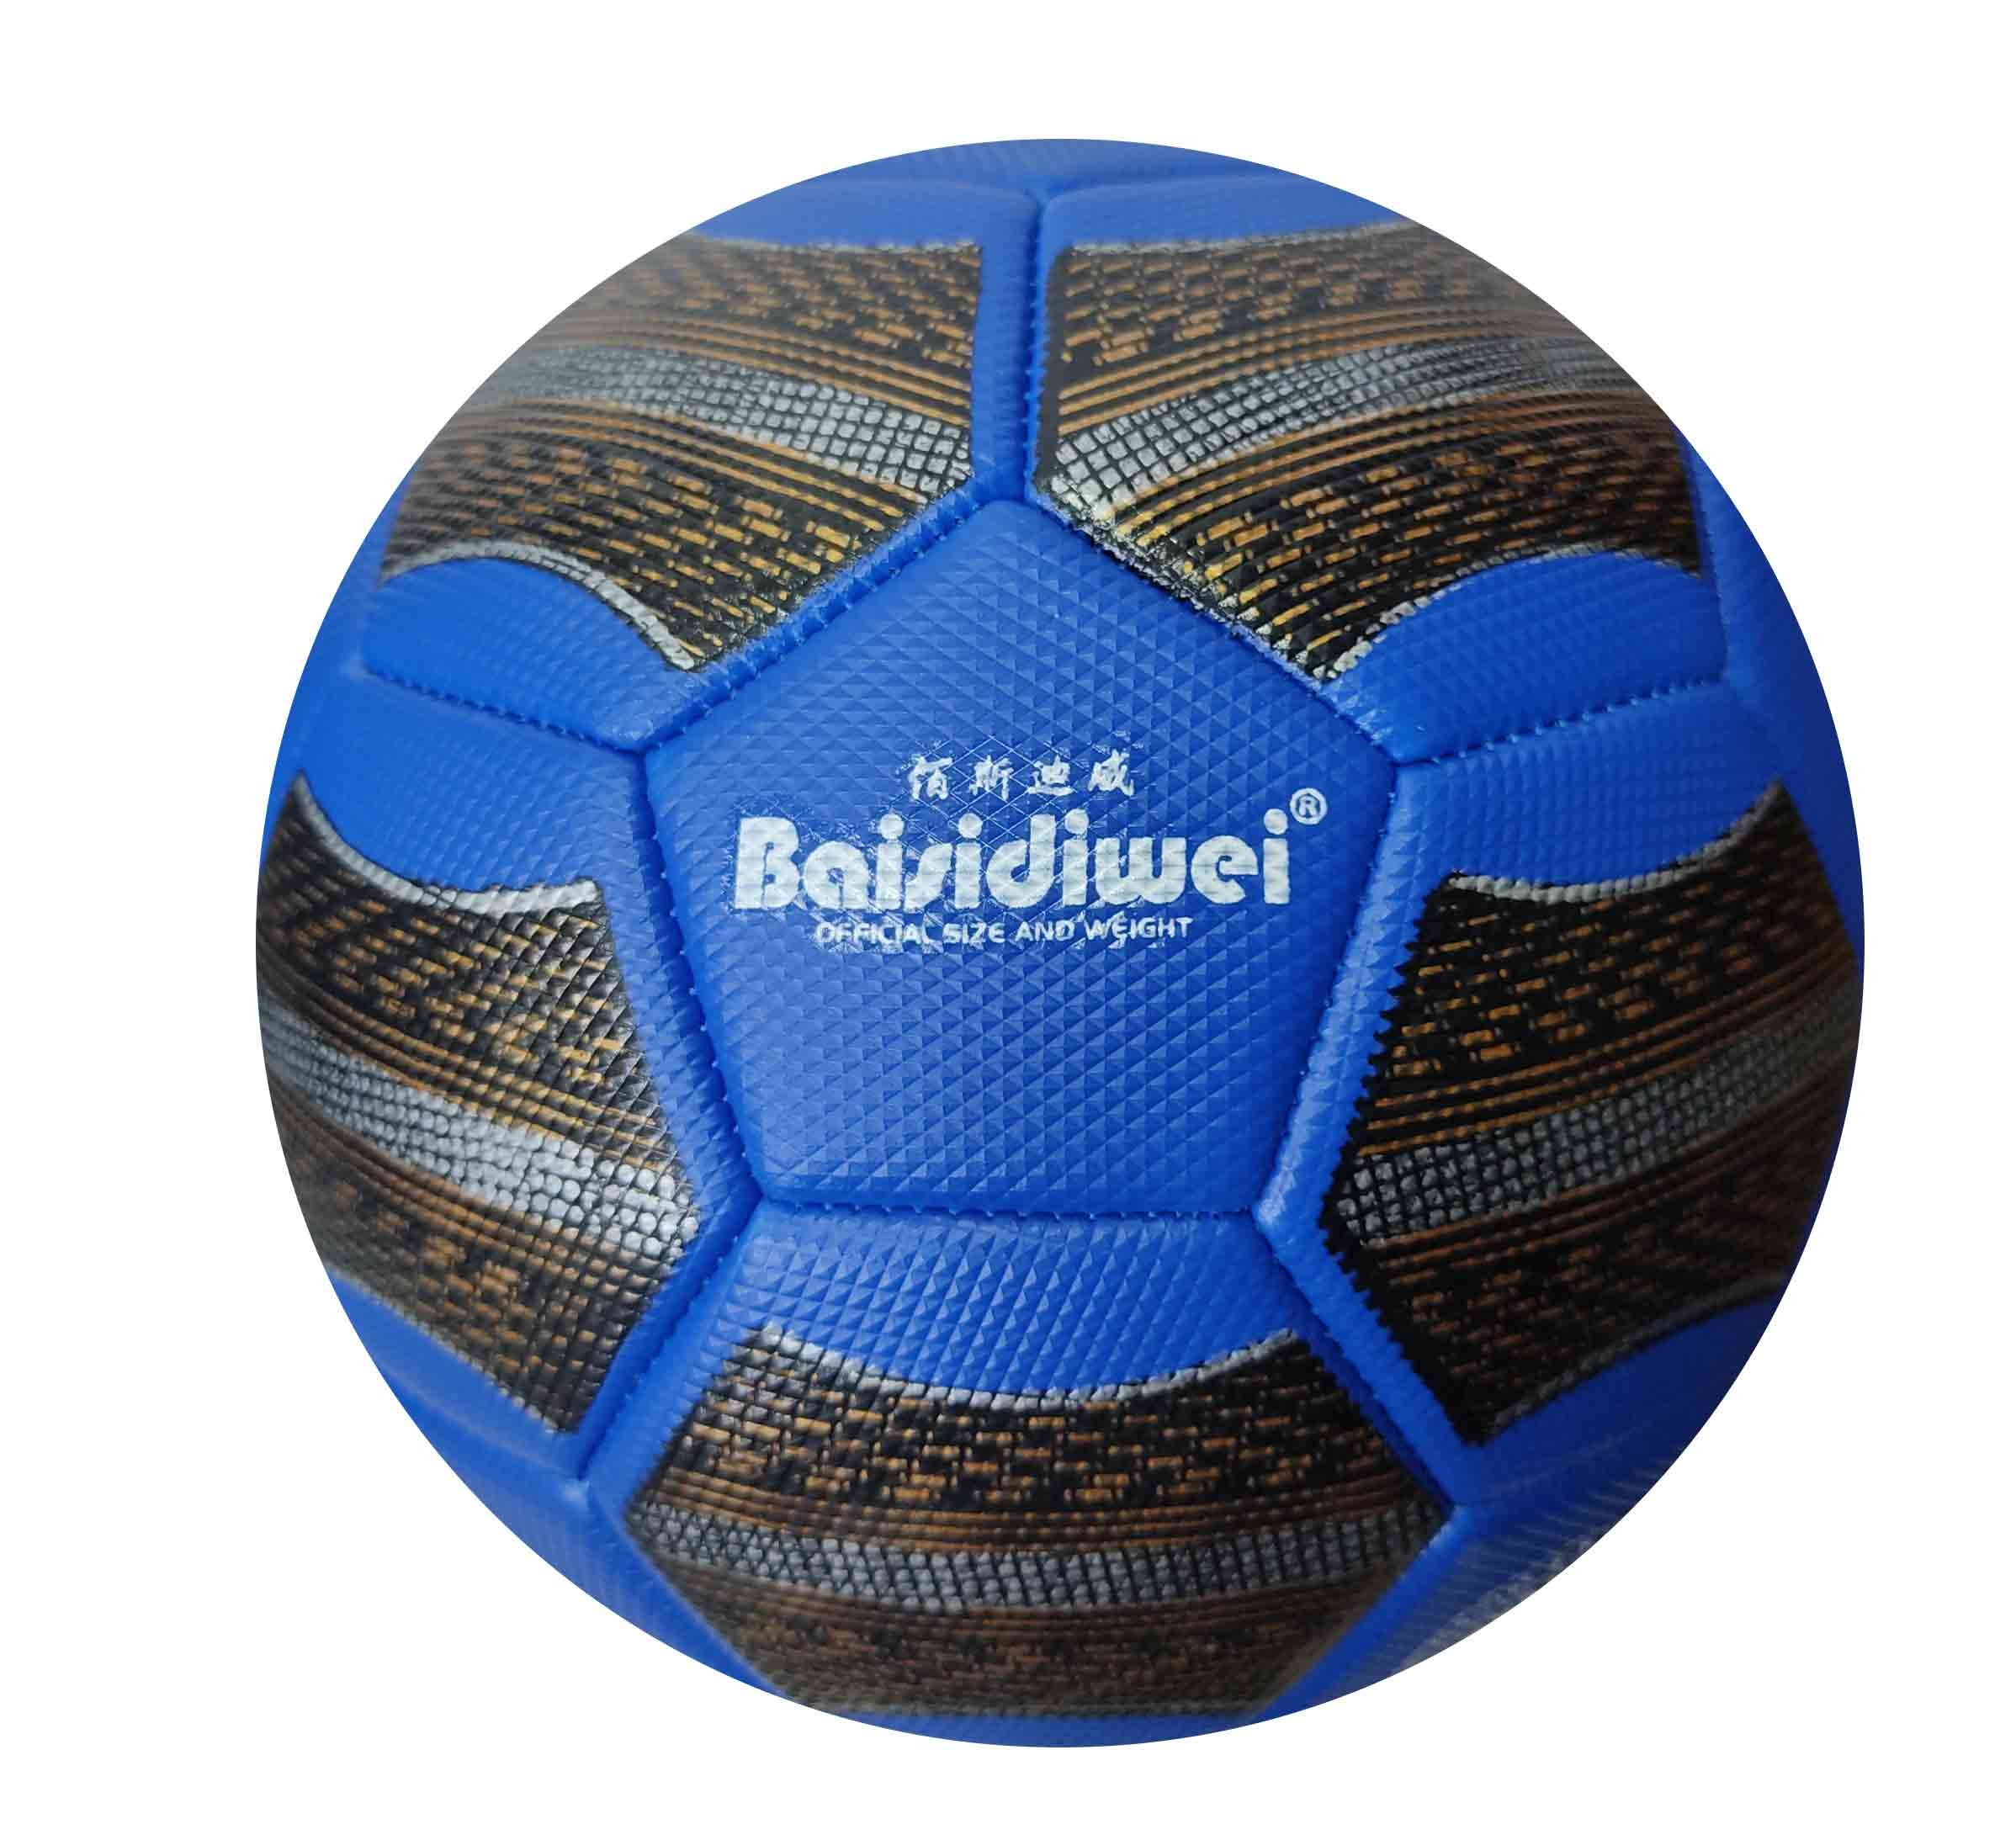 Baisidiwei │ pelota de fútbol